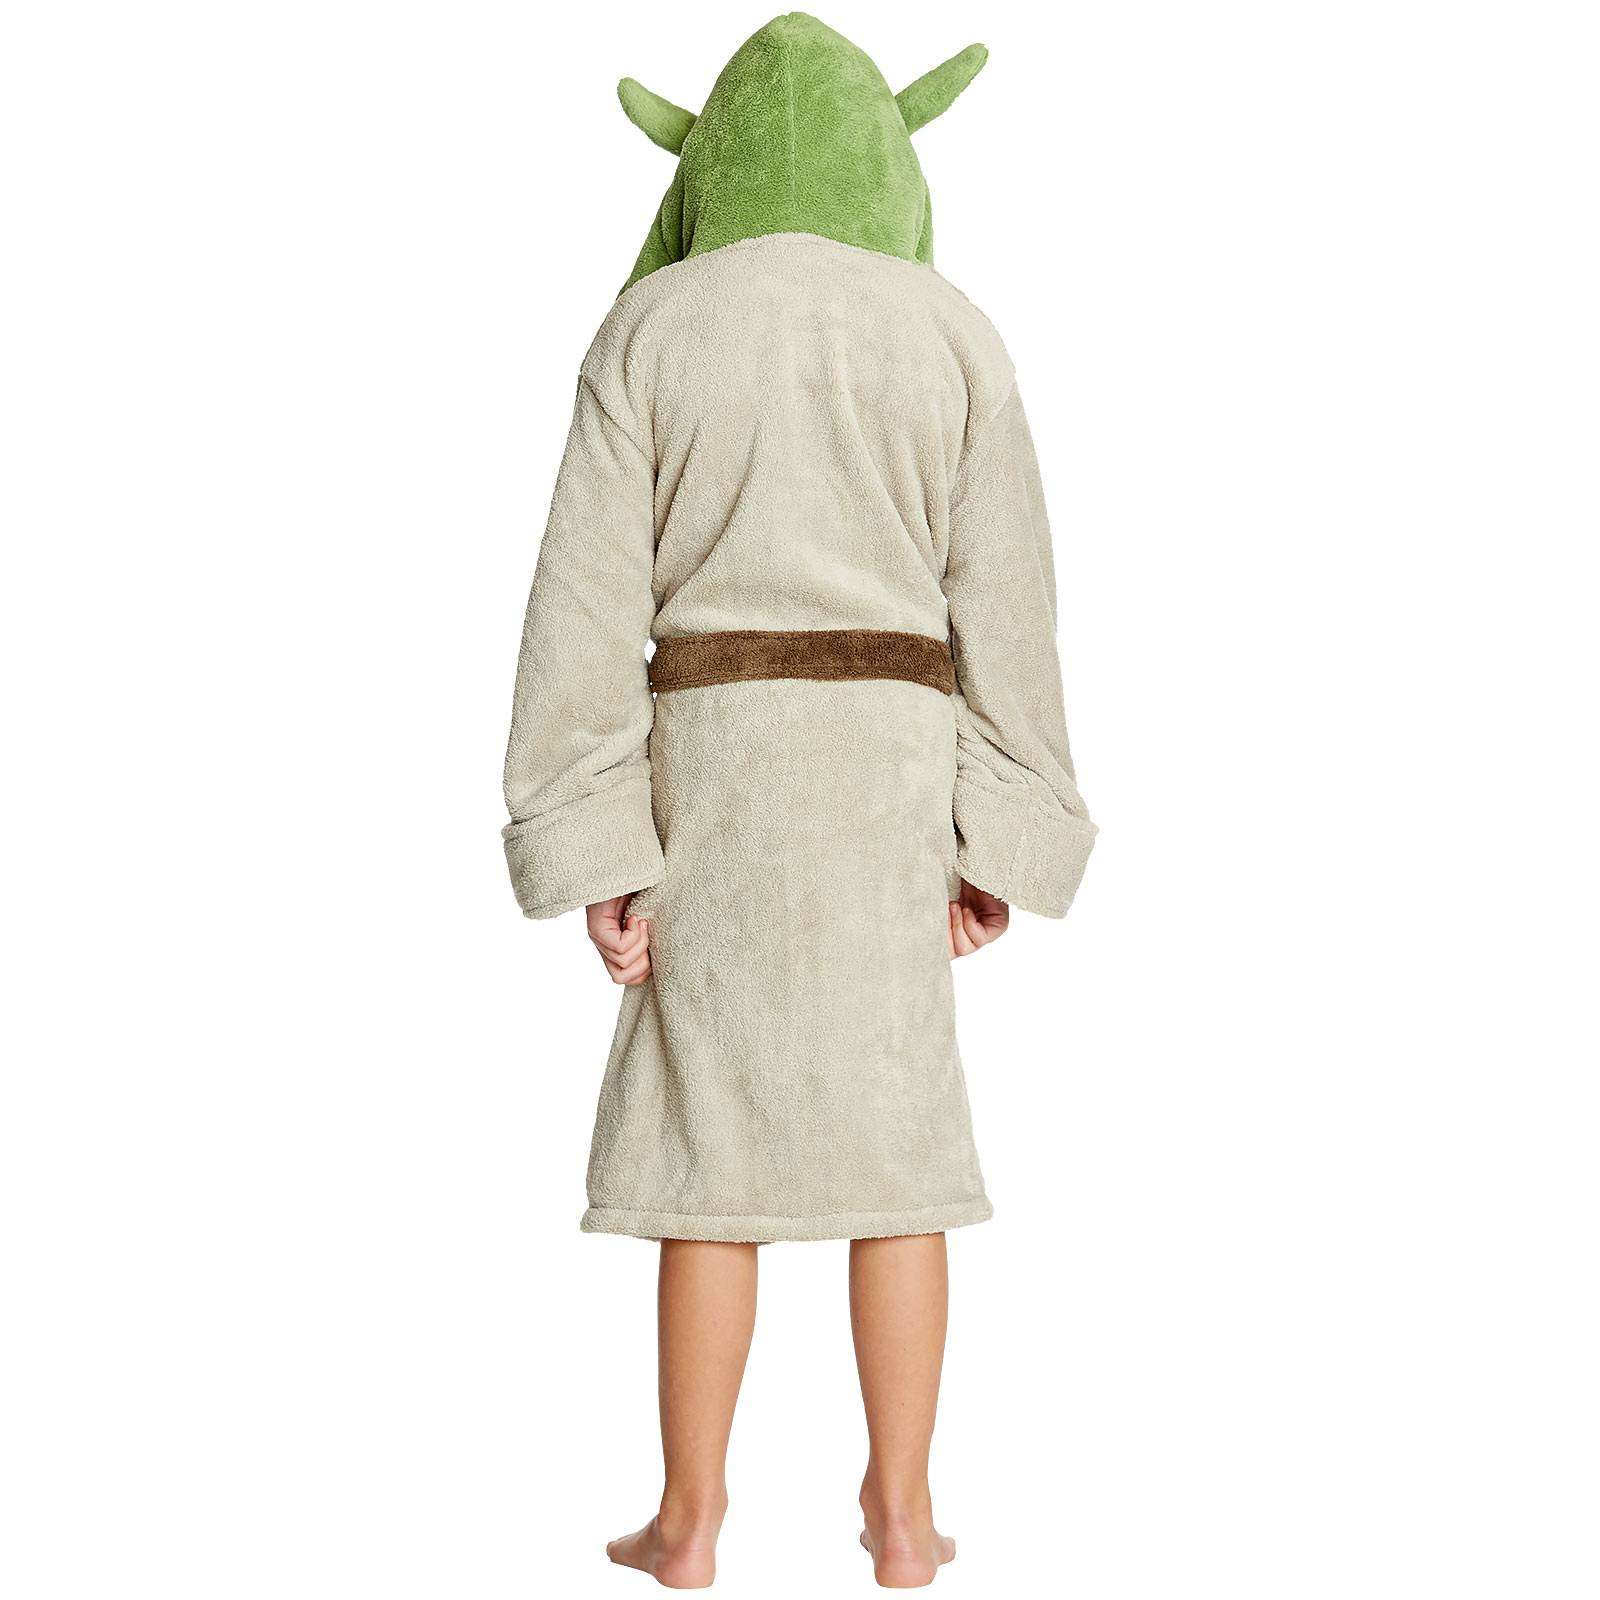 Star Wars - Yoda Kinder Bademantel